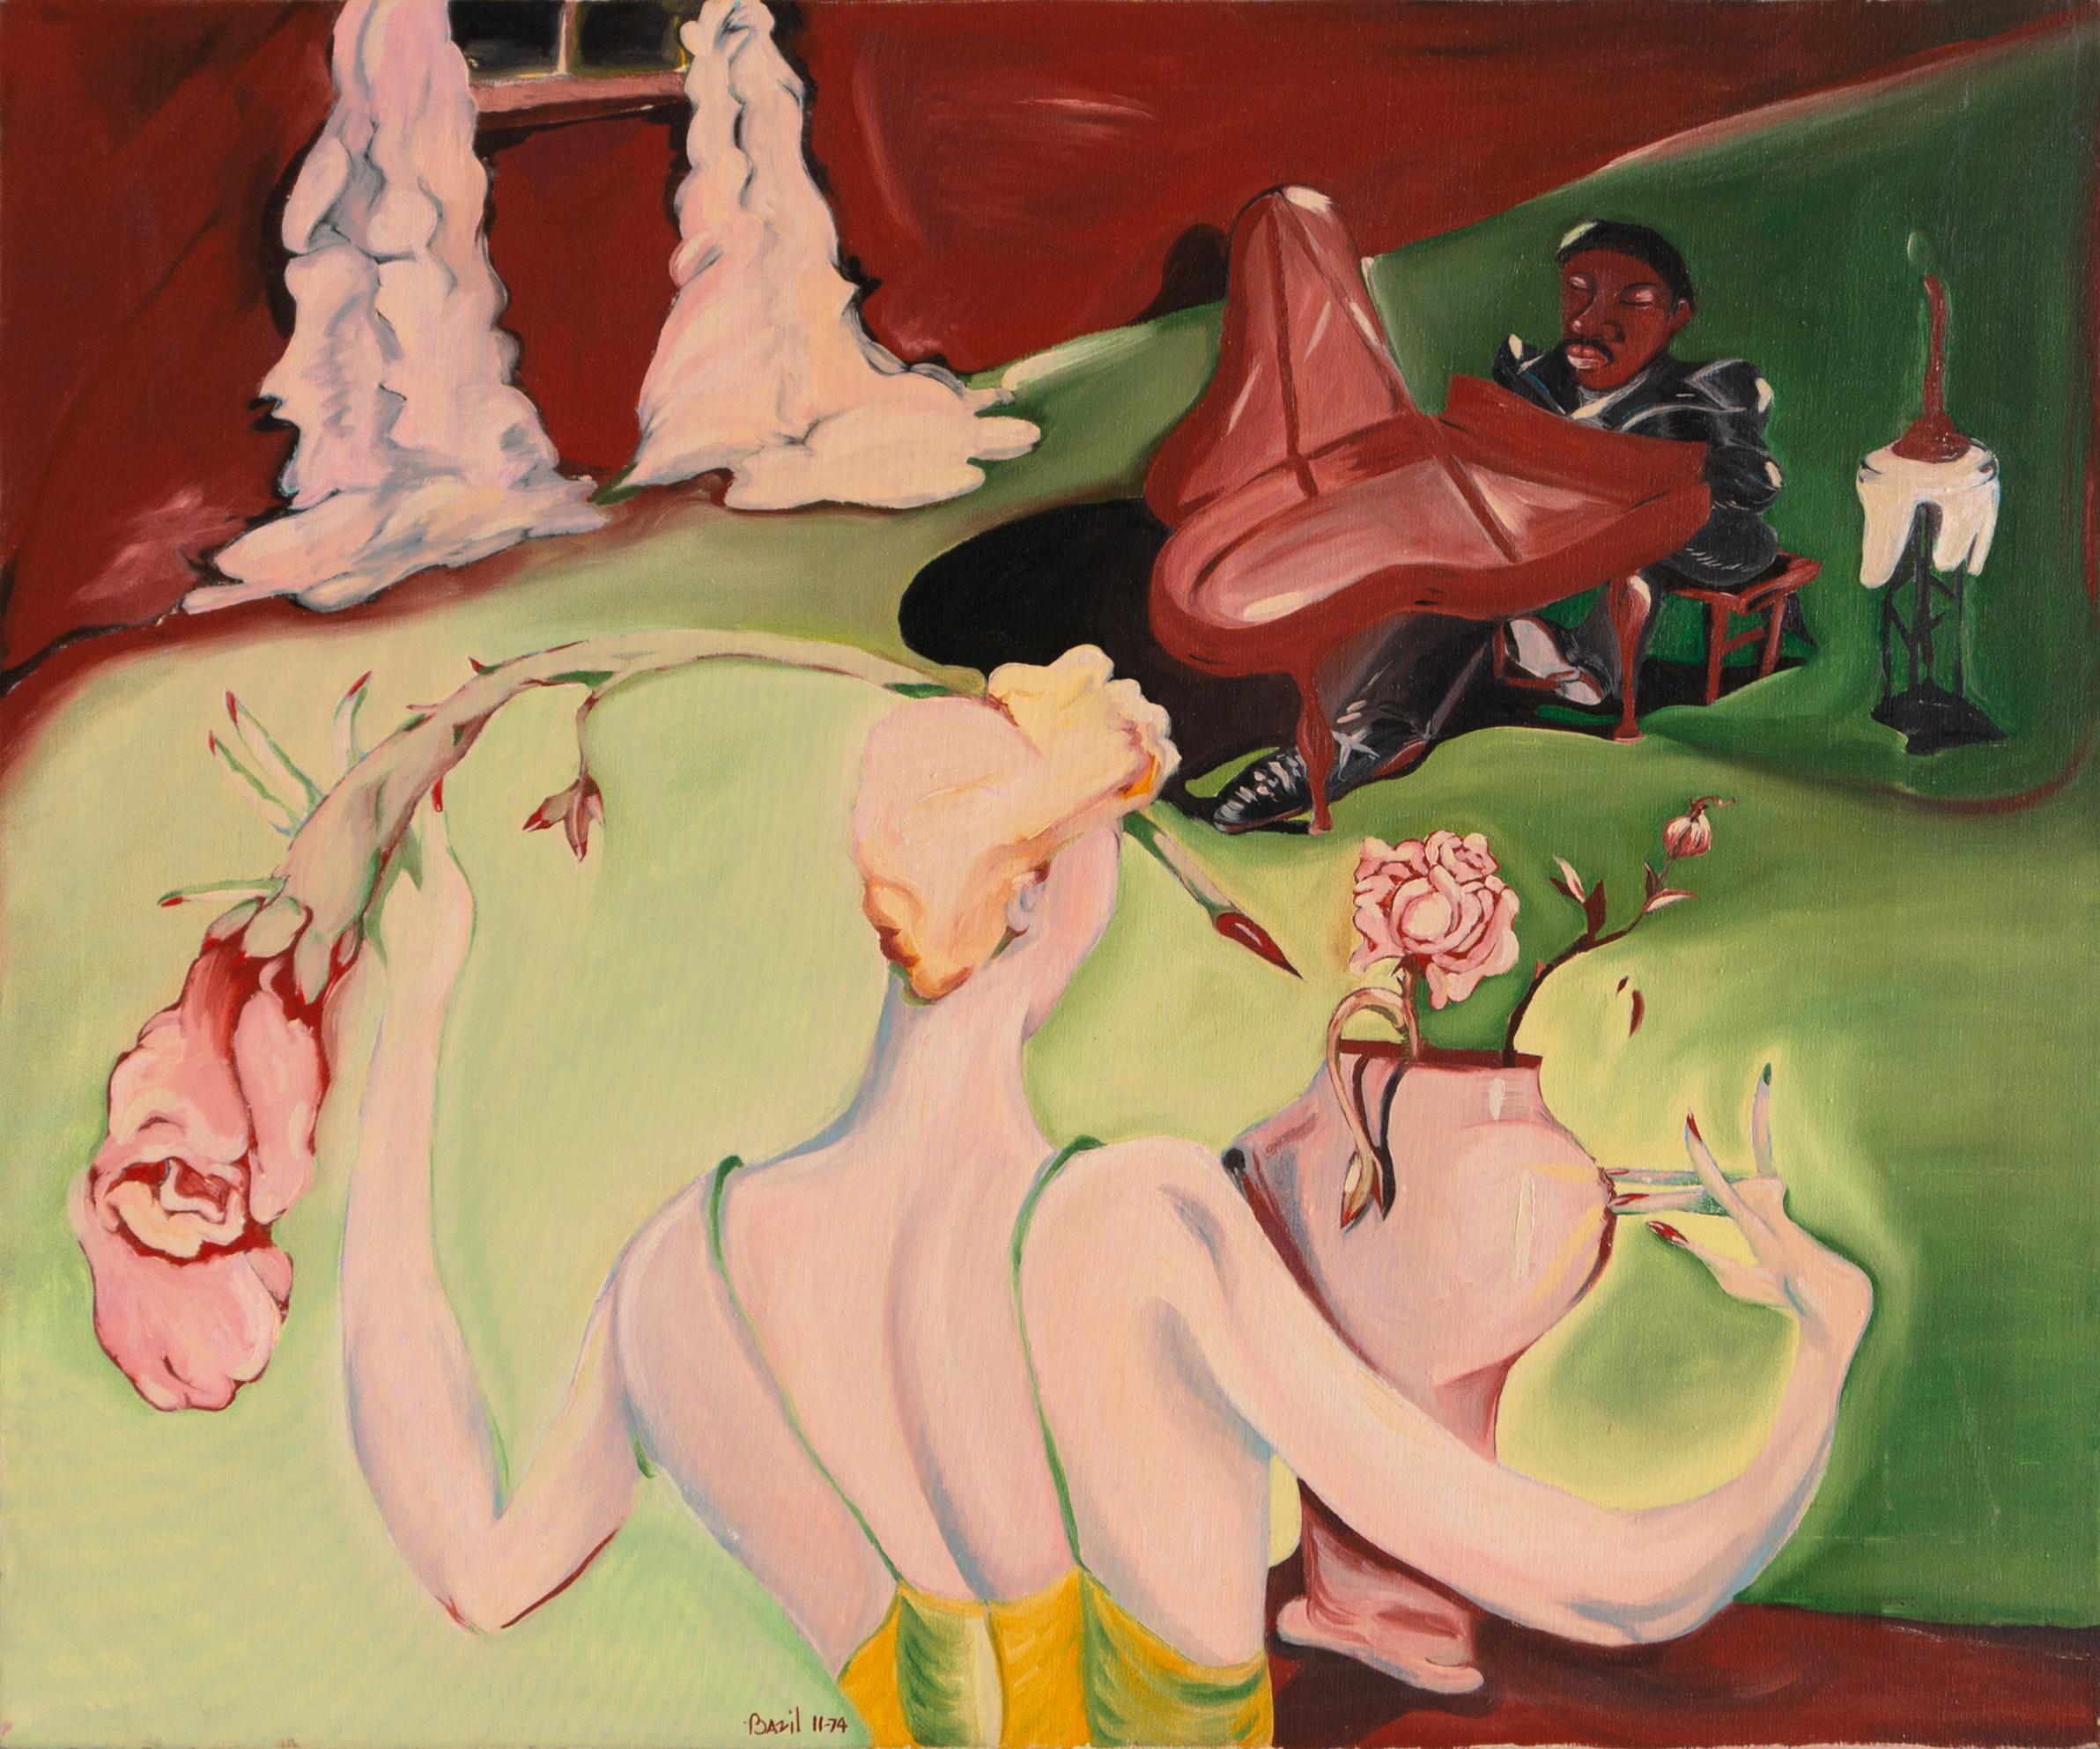 Bazil Figurative Painting - 'Eros & Jazz', Large Post Impressionist Figural Oil, Beat Movement, Music, Roses